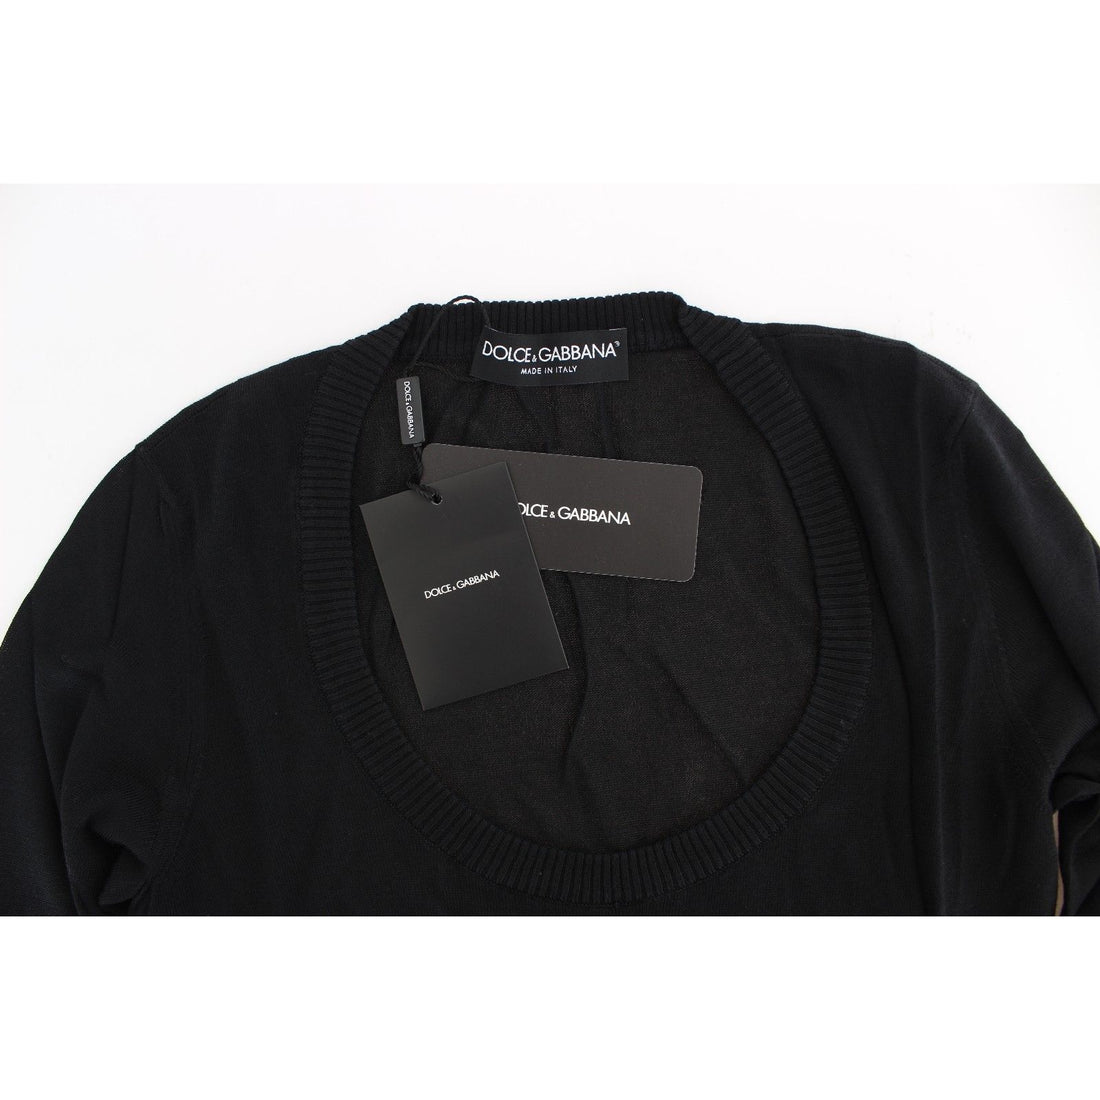 Dolce & Gabbana Black Cashmere Crewneck Sweater Pullover - Paris Deluxe